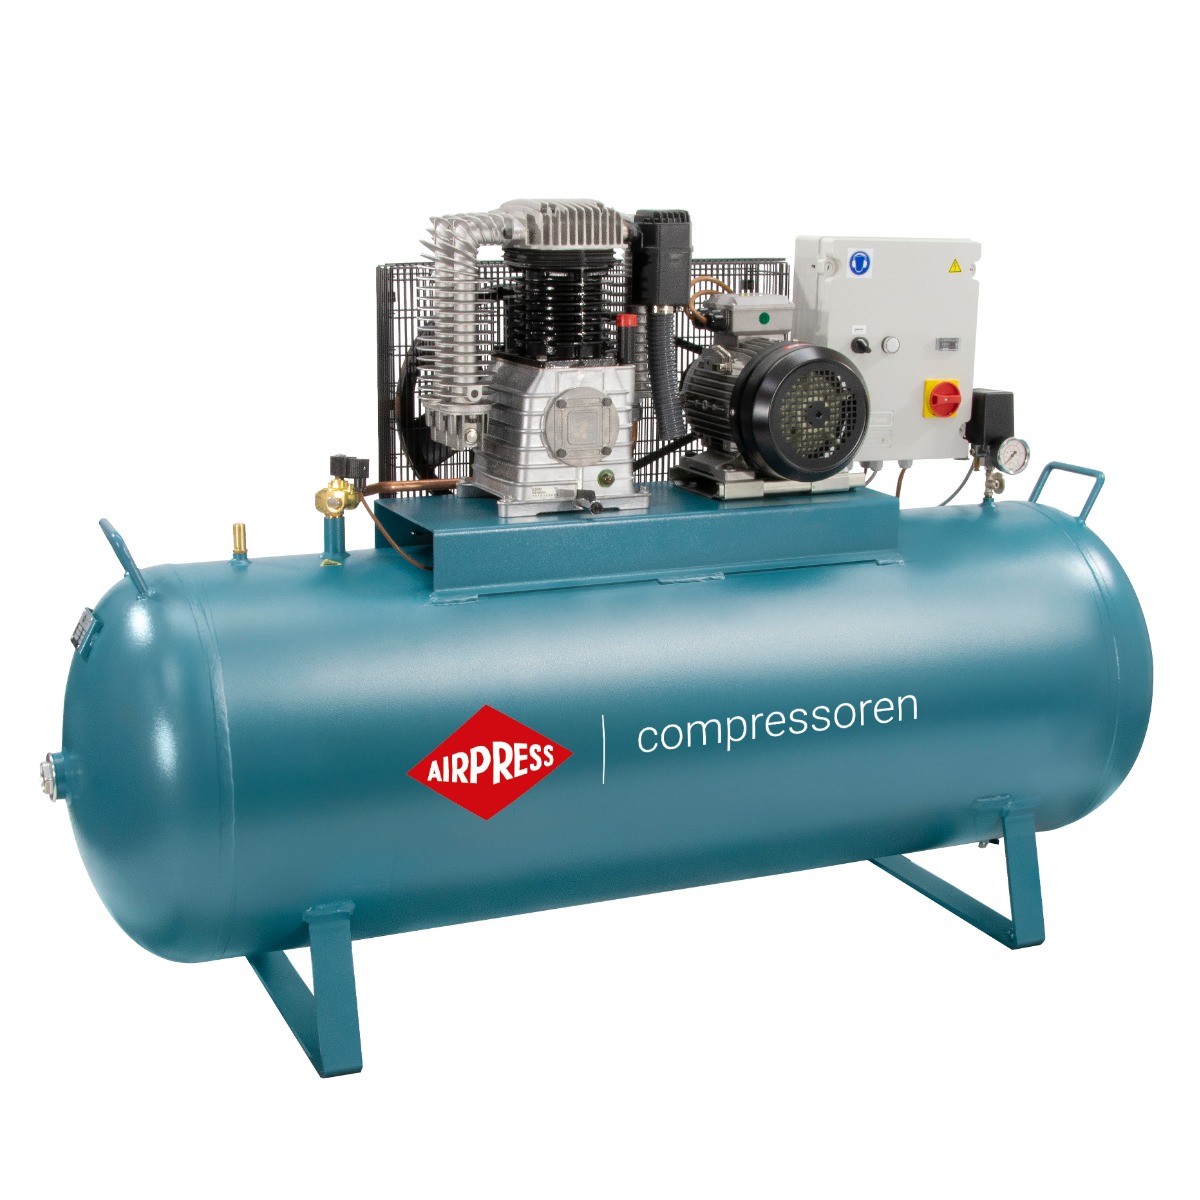 Compressor - 500 ltkompresor - 500 litre компрессор. Компрессор промышленный 1000 литров. Компрессор вектор 600. Компрессор 1000 л мин